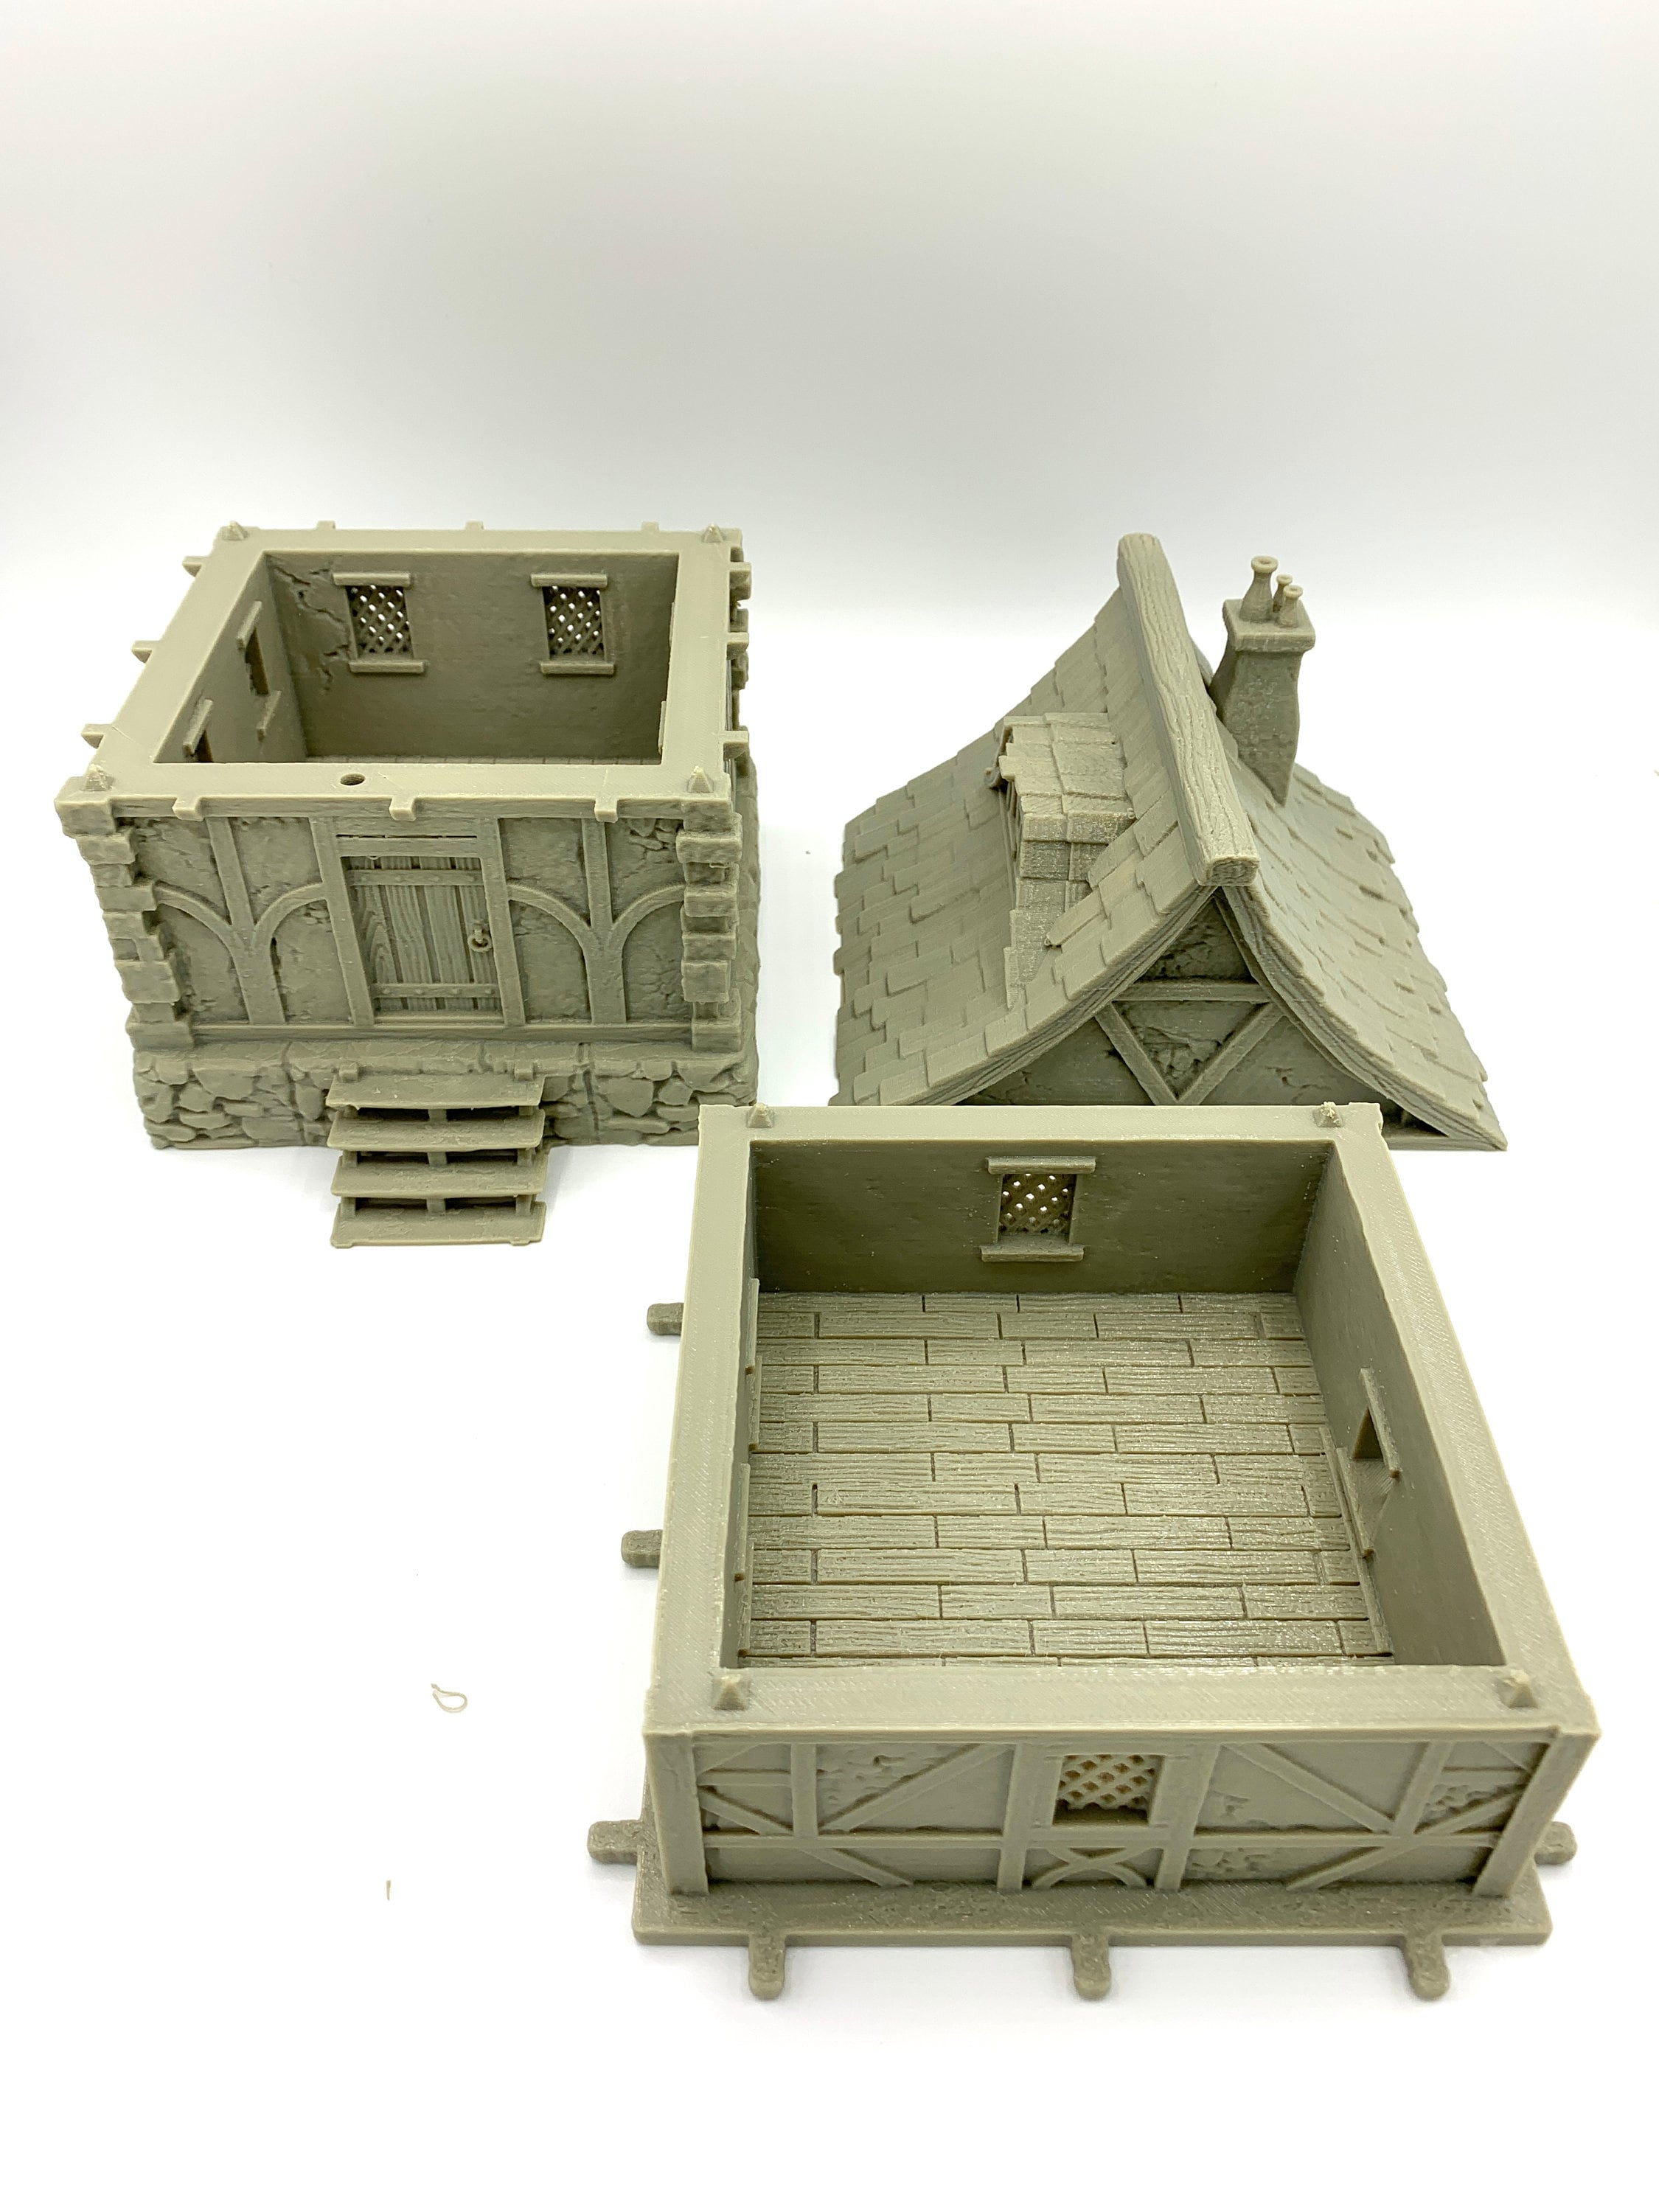 Tiradom House 2 / Kingdom of Tiradom Terrain / RPG and Wargame 3d Printed Tabletop Terrain / Licensed Printer